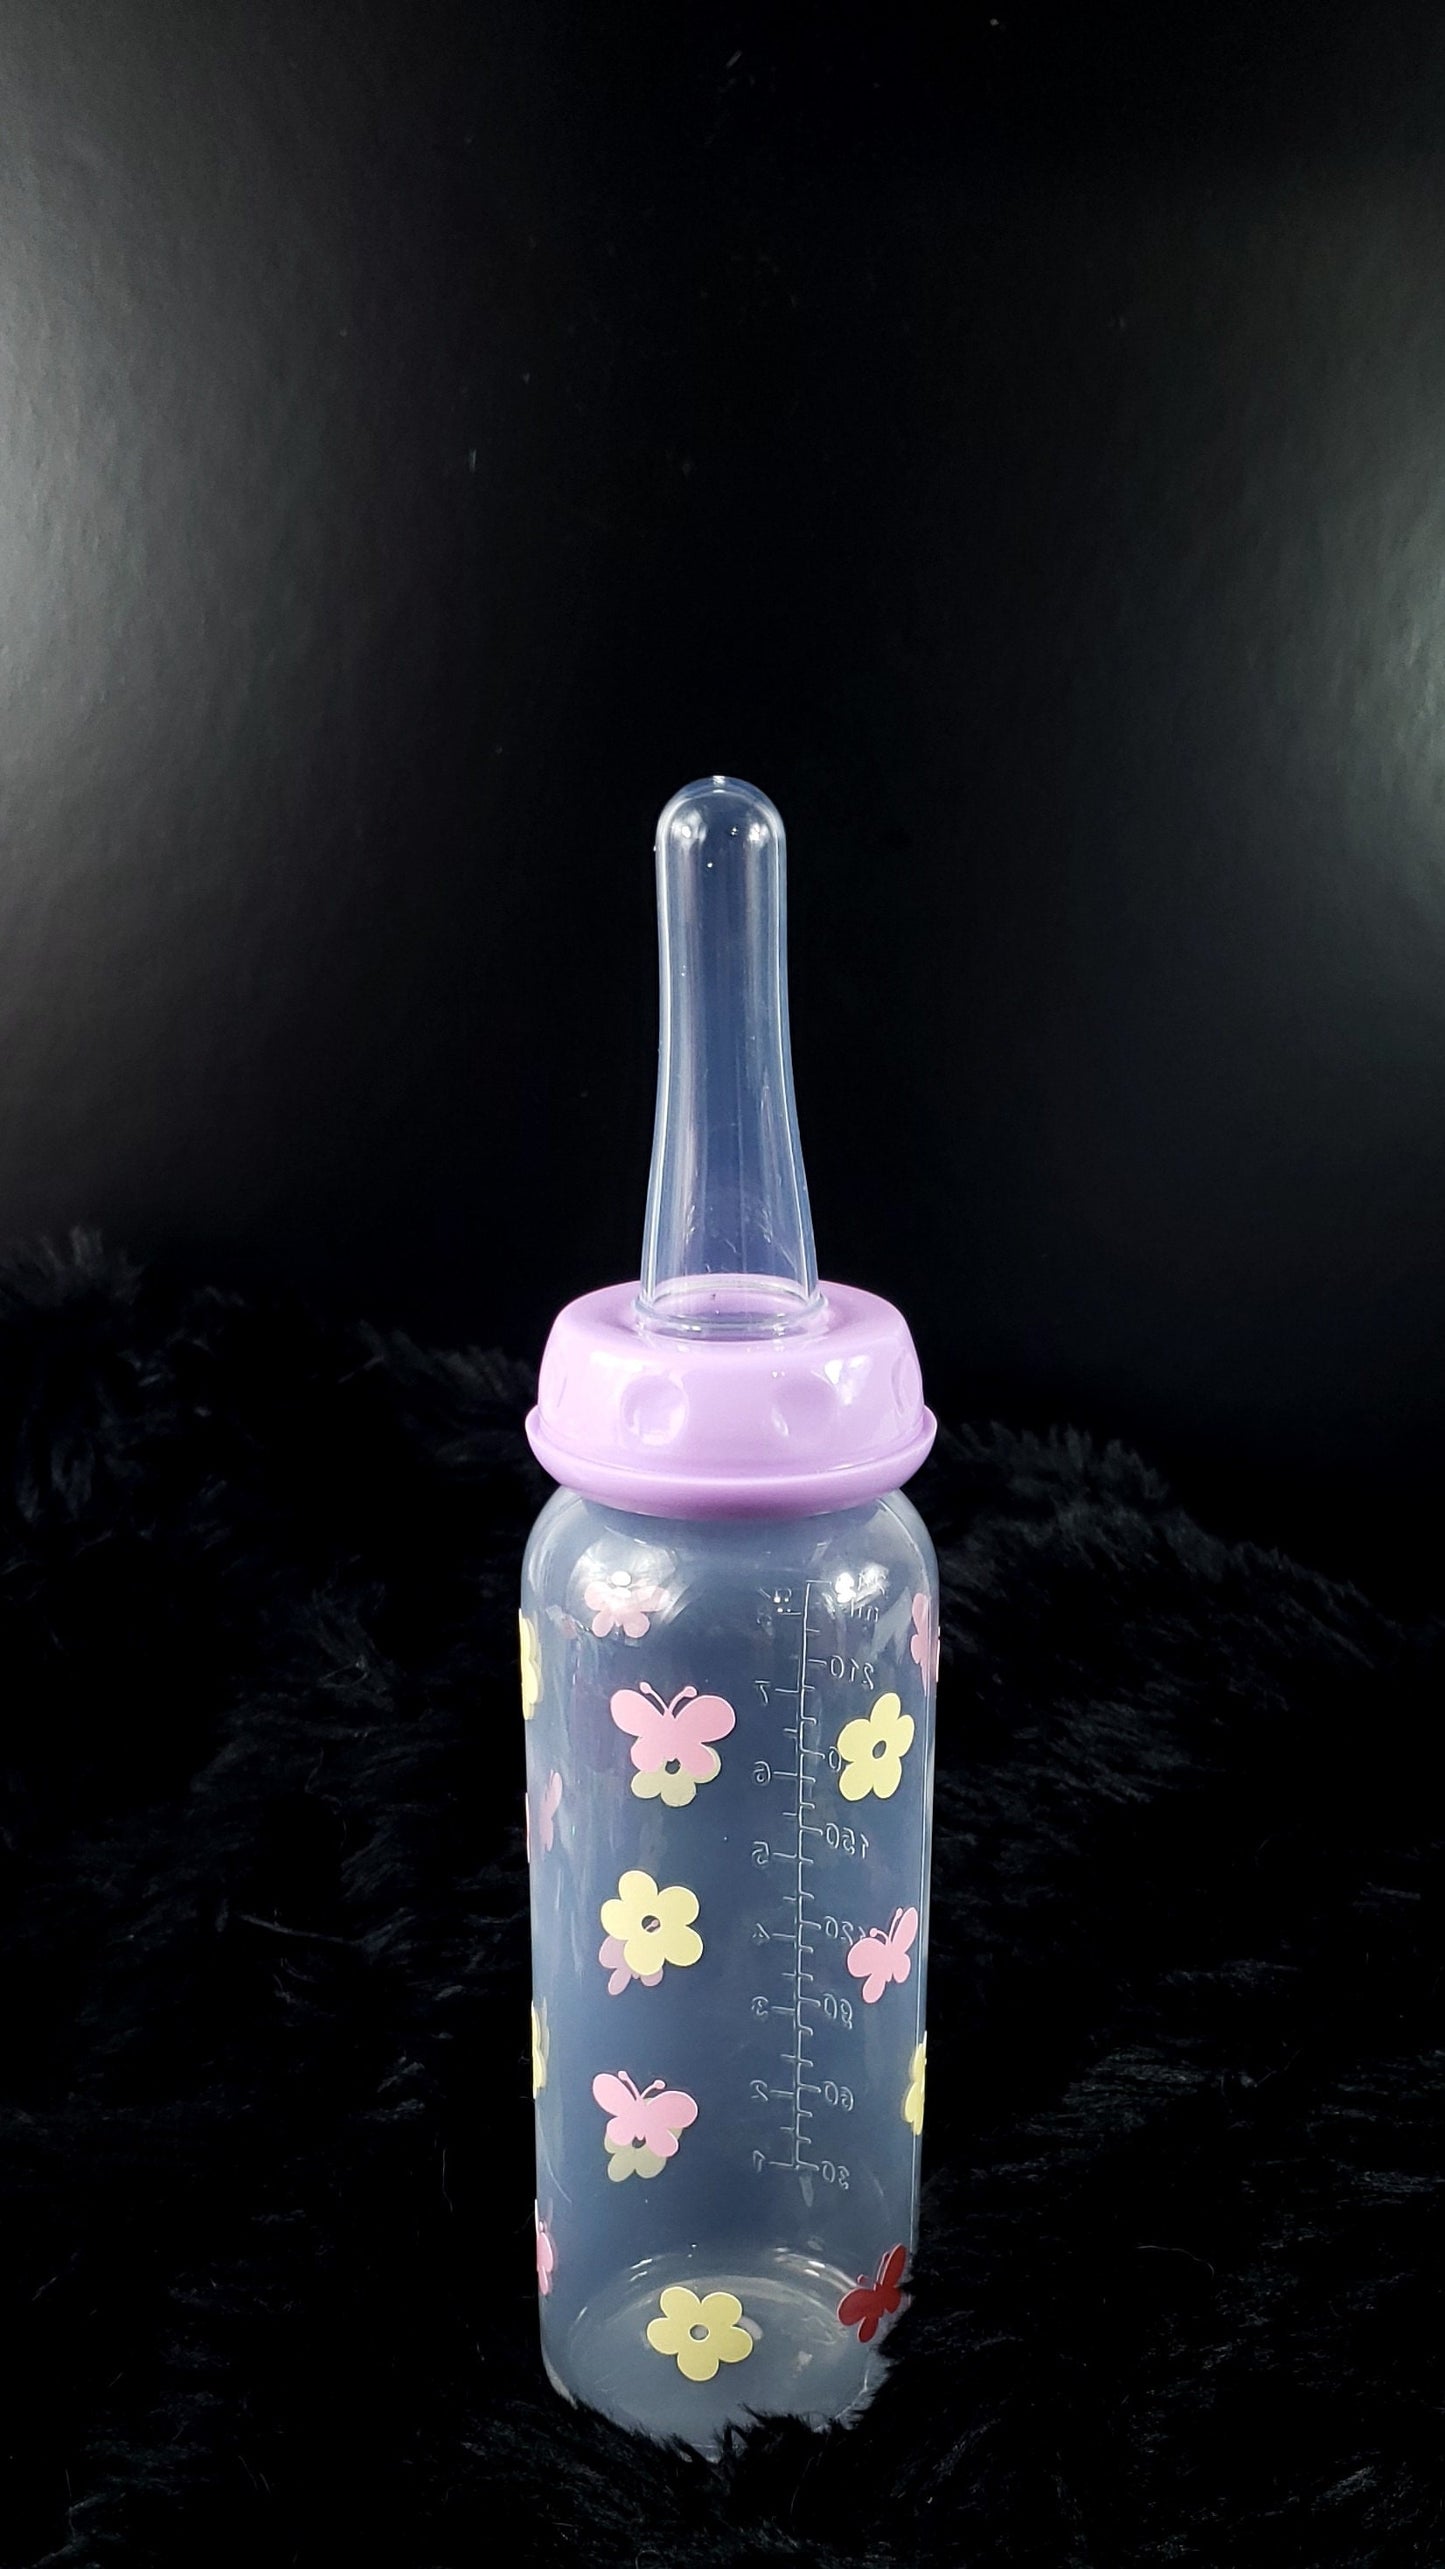 Butterfly & Flowers ABDL Bottle - 8 oz